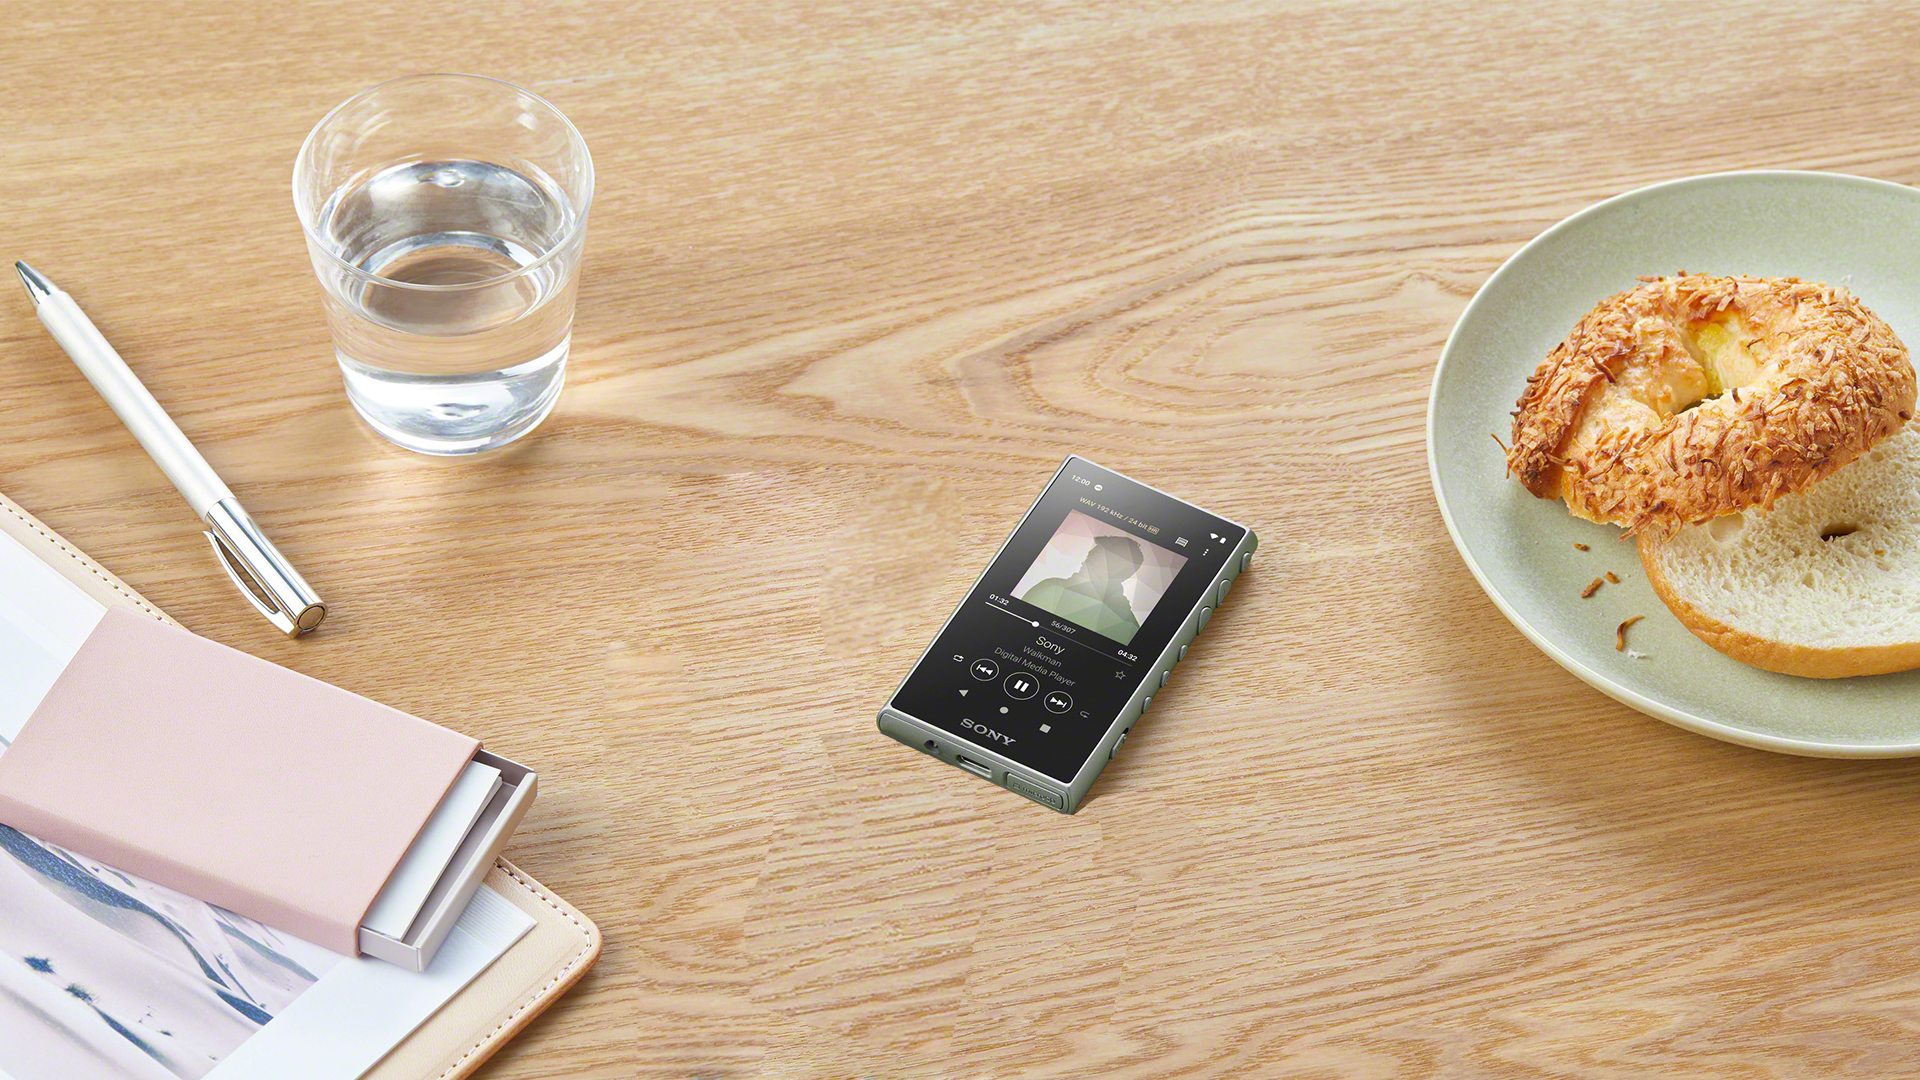 SONY Walkman NW-A105 Android Mp3-Player Grün 16 GB, 9.0